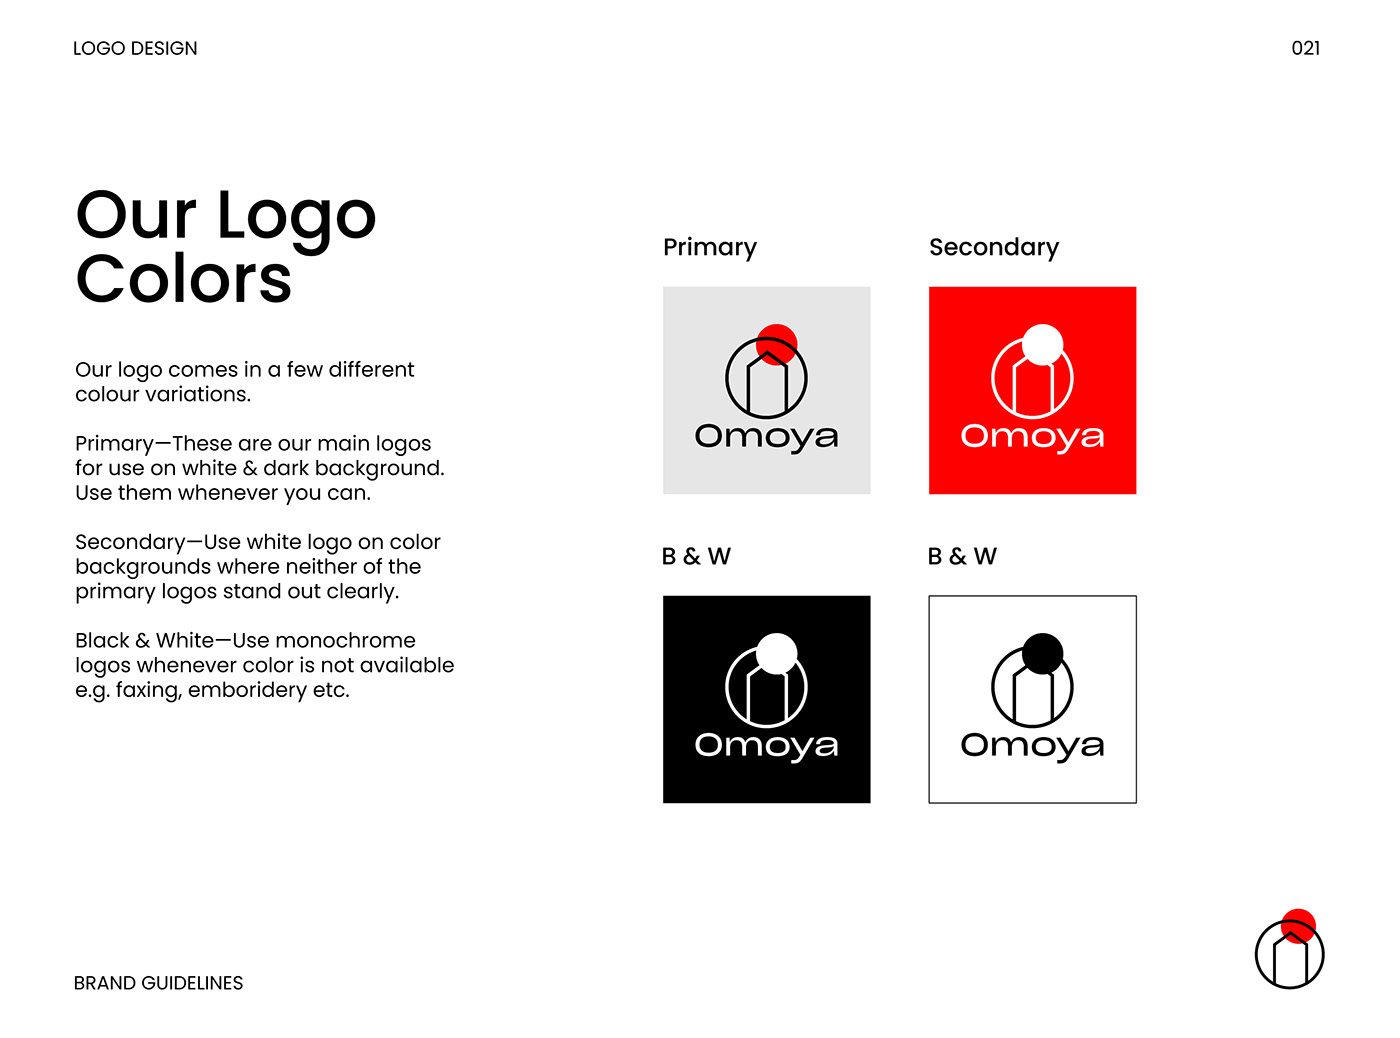 brand book Typeface visual identity visual design branding  Logo Design brand identity free type brand guidelines brand identity design